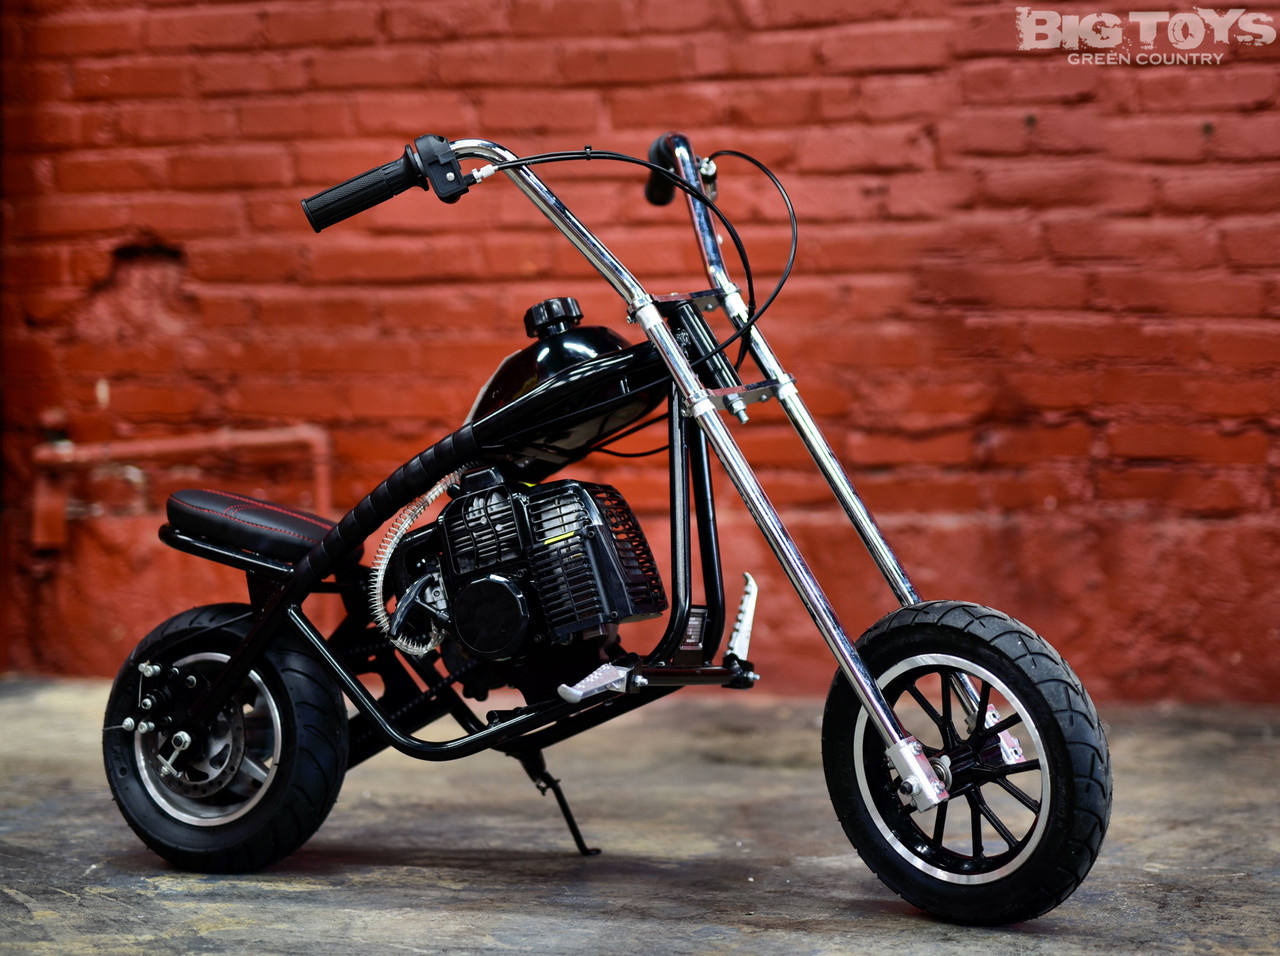 Fast Kids Mini Bike Chopper Motorcycle 49cc Gas Black Big Toys